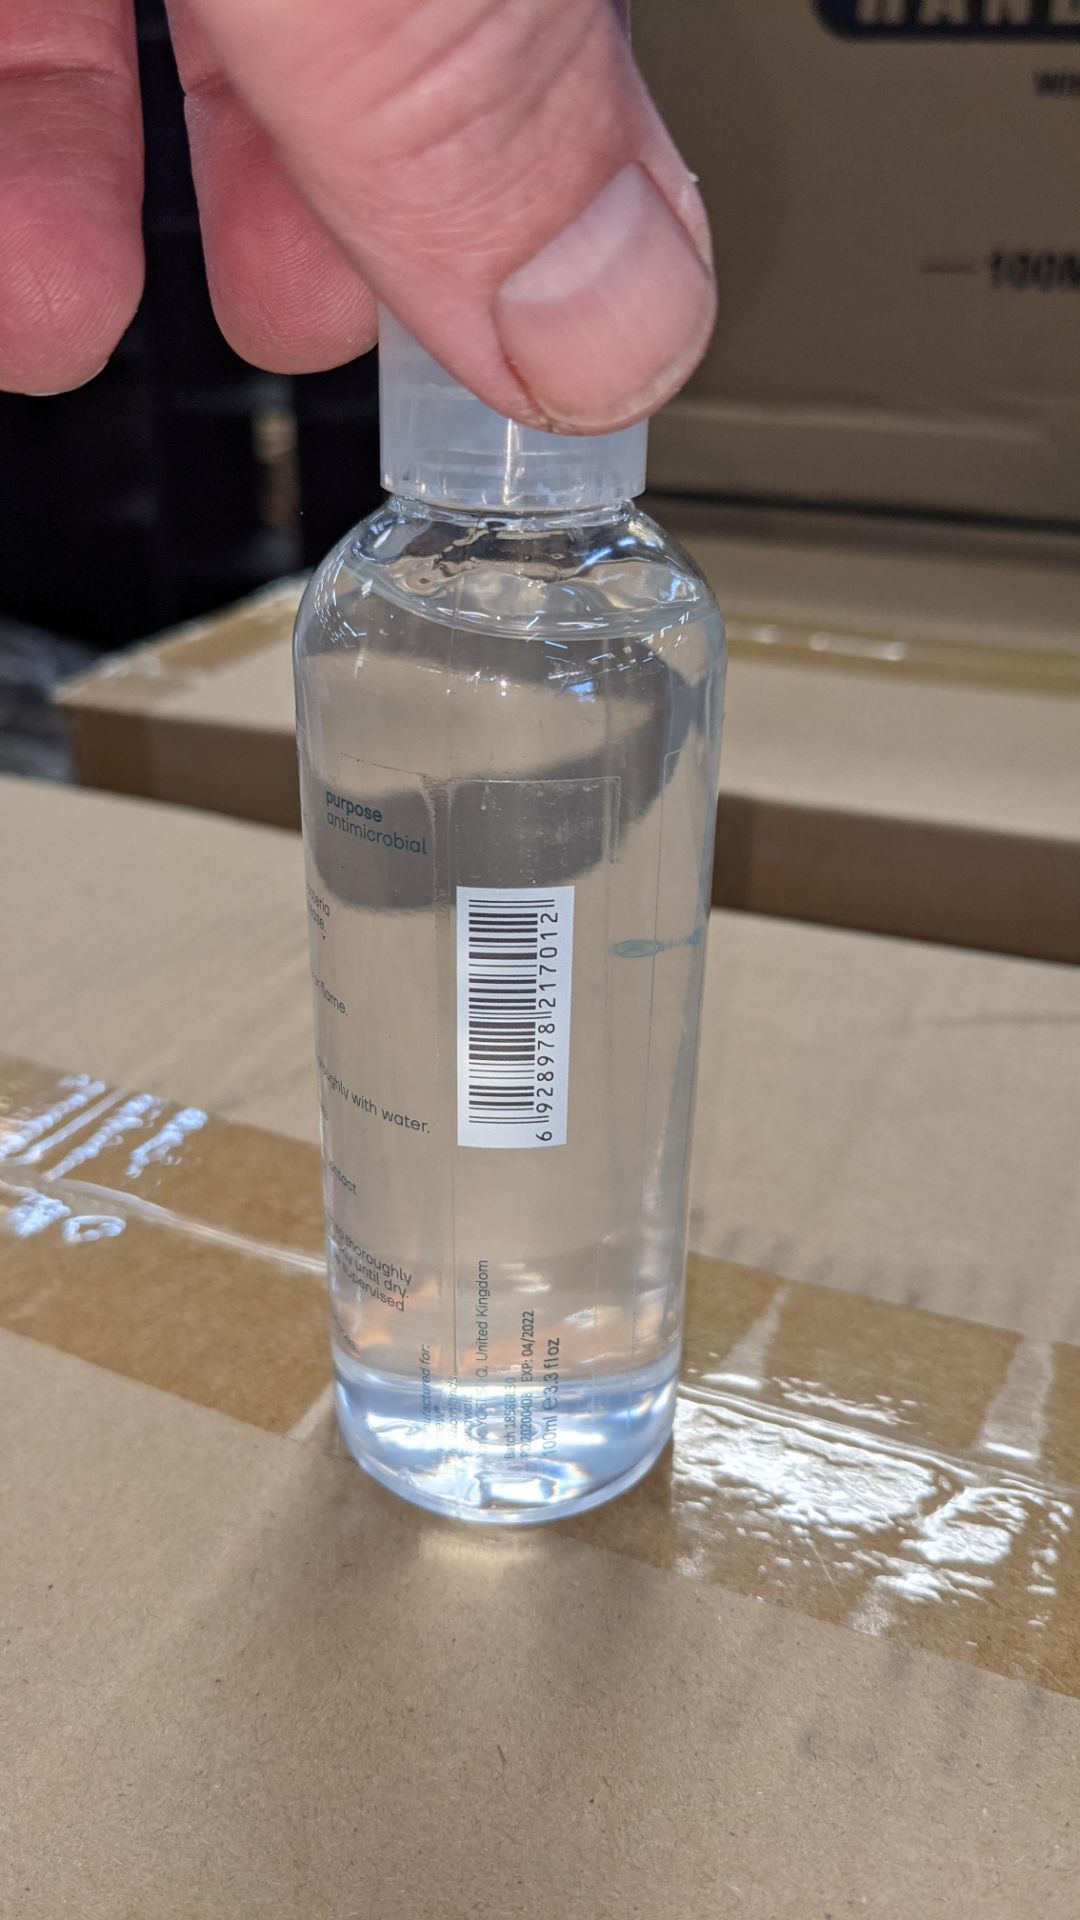 1,440 off 100ml bottles of Renew Hand Sanitiser waterless gel. Alcohol based (75% ethanol), Aloe ext - Image 11 of 14